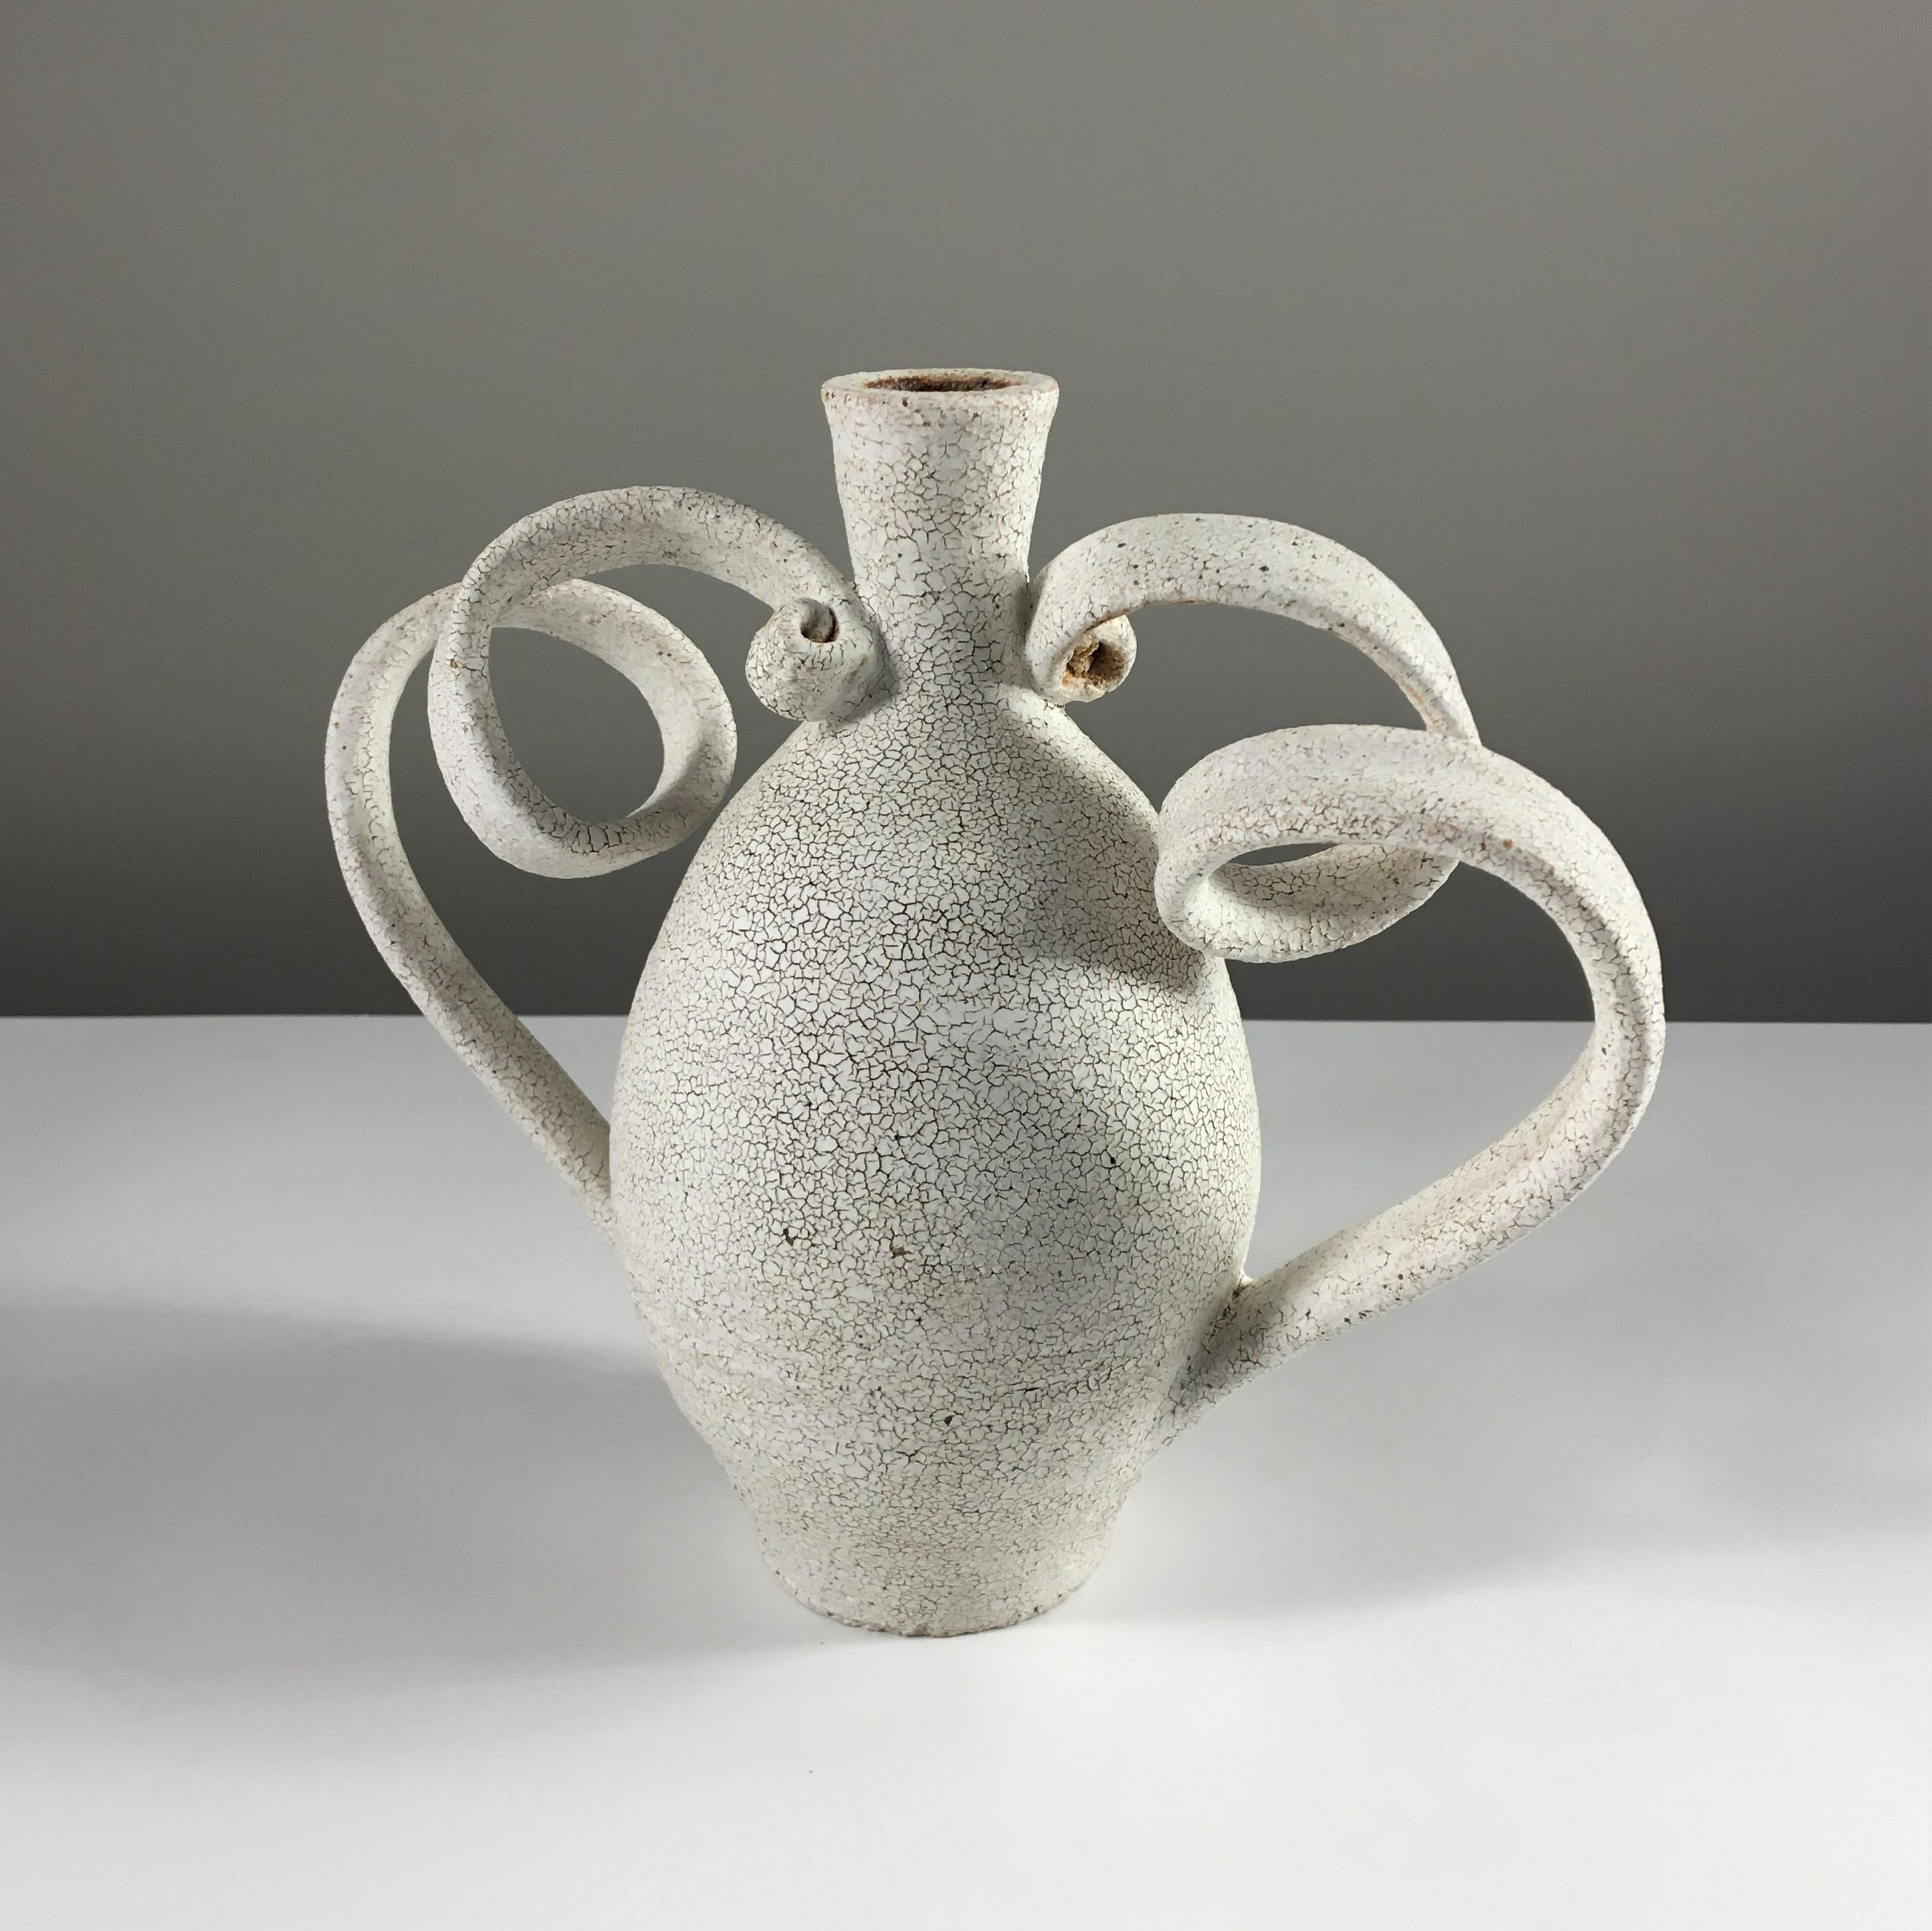 Amphora Ceramic Vase with Bottle Neck by Yumiko Kuga. Dimensions: W 9.5